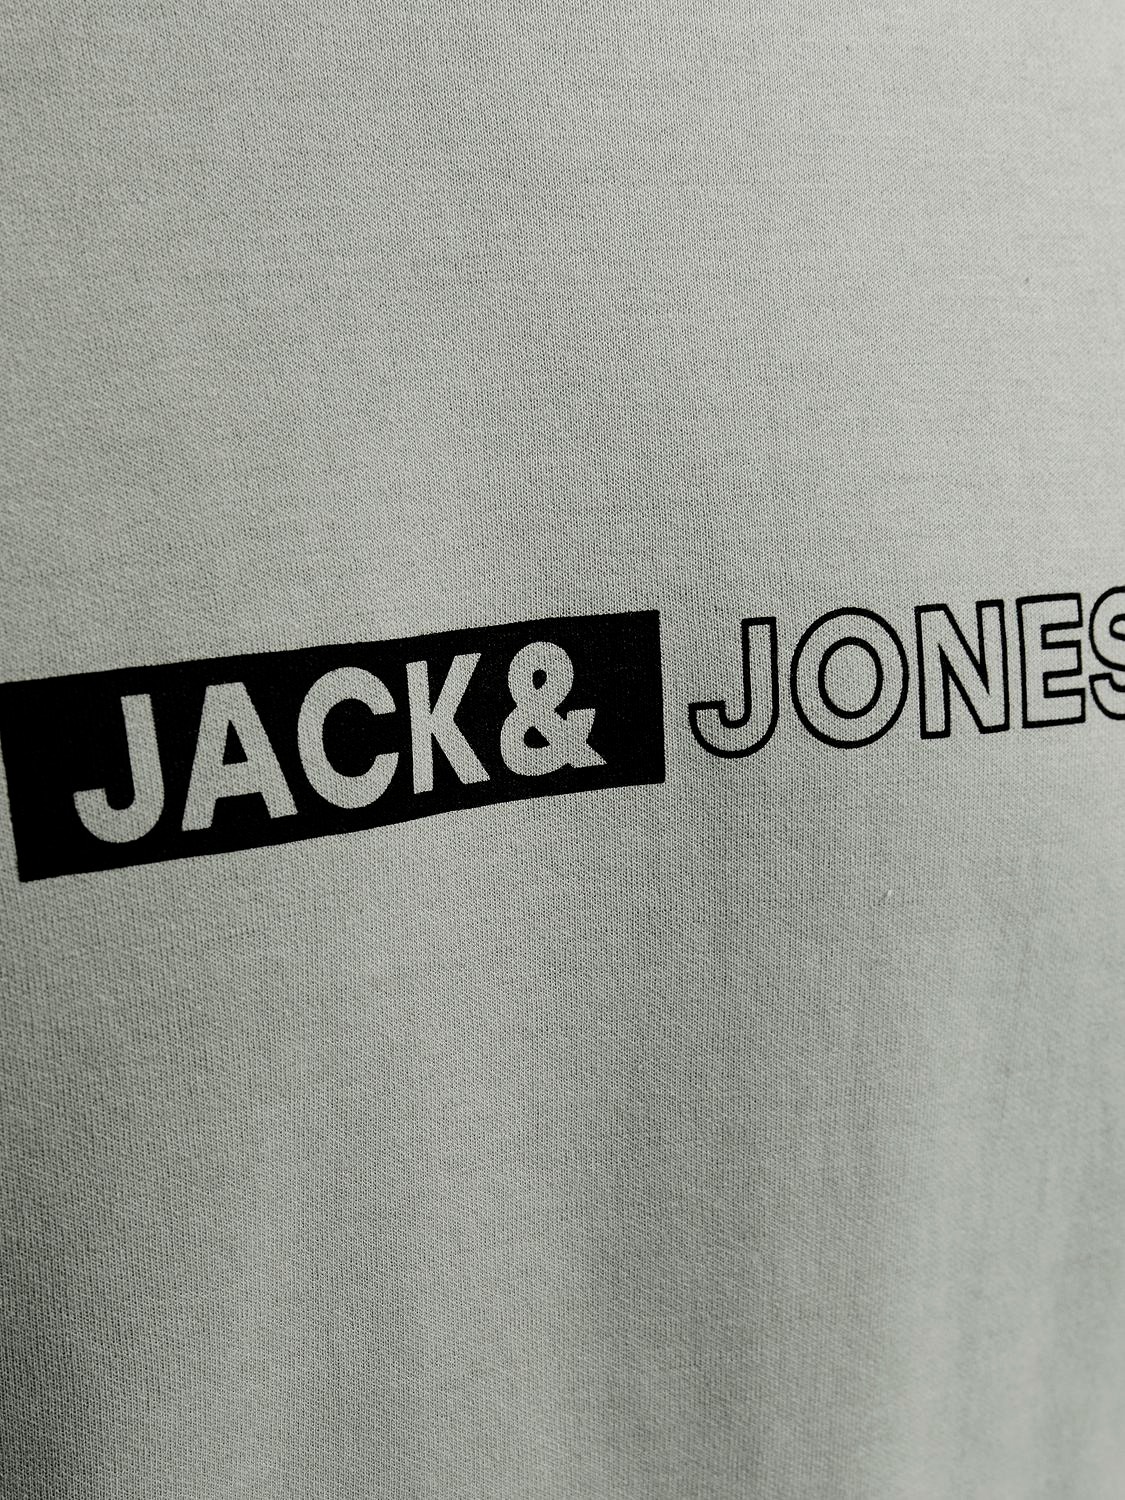 Jack & Jones Logo Crew neck Sweatshirt -Wrought Iron - 12255067